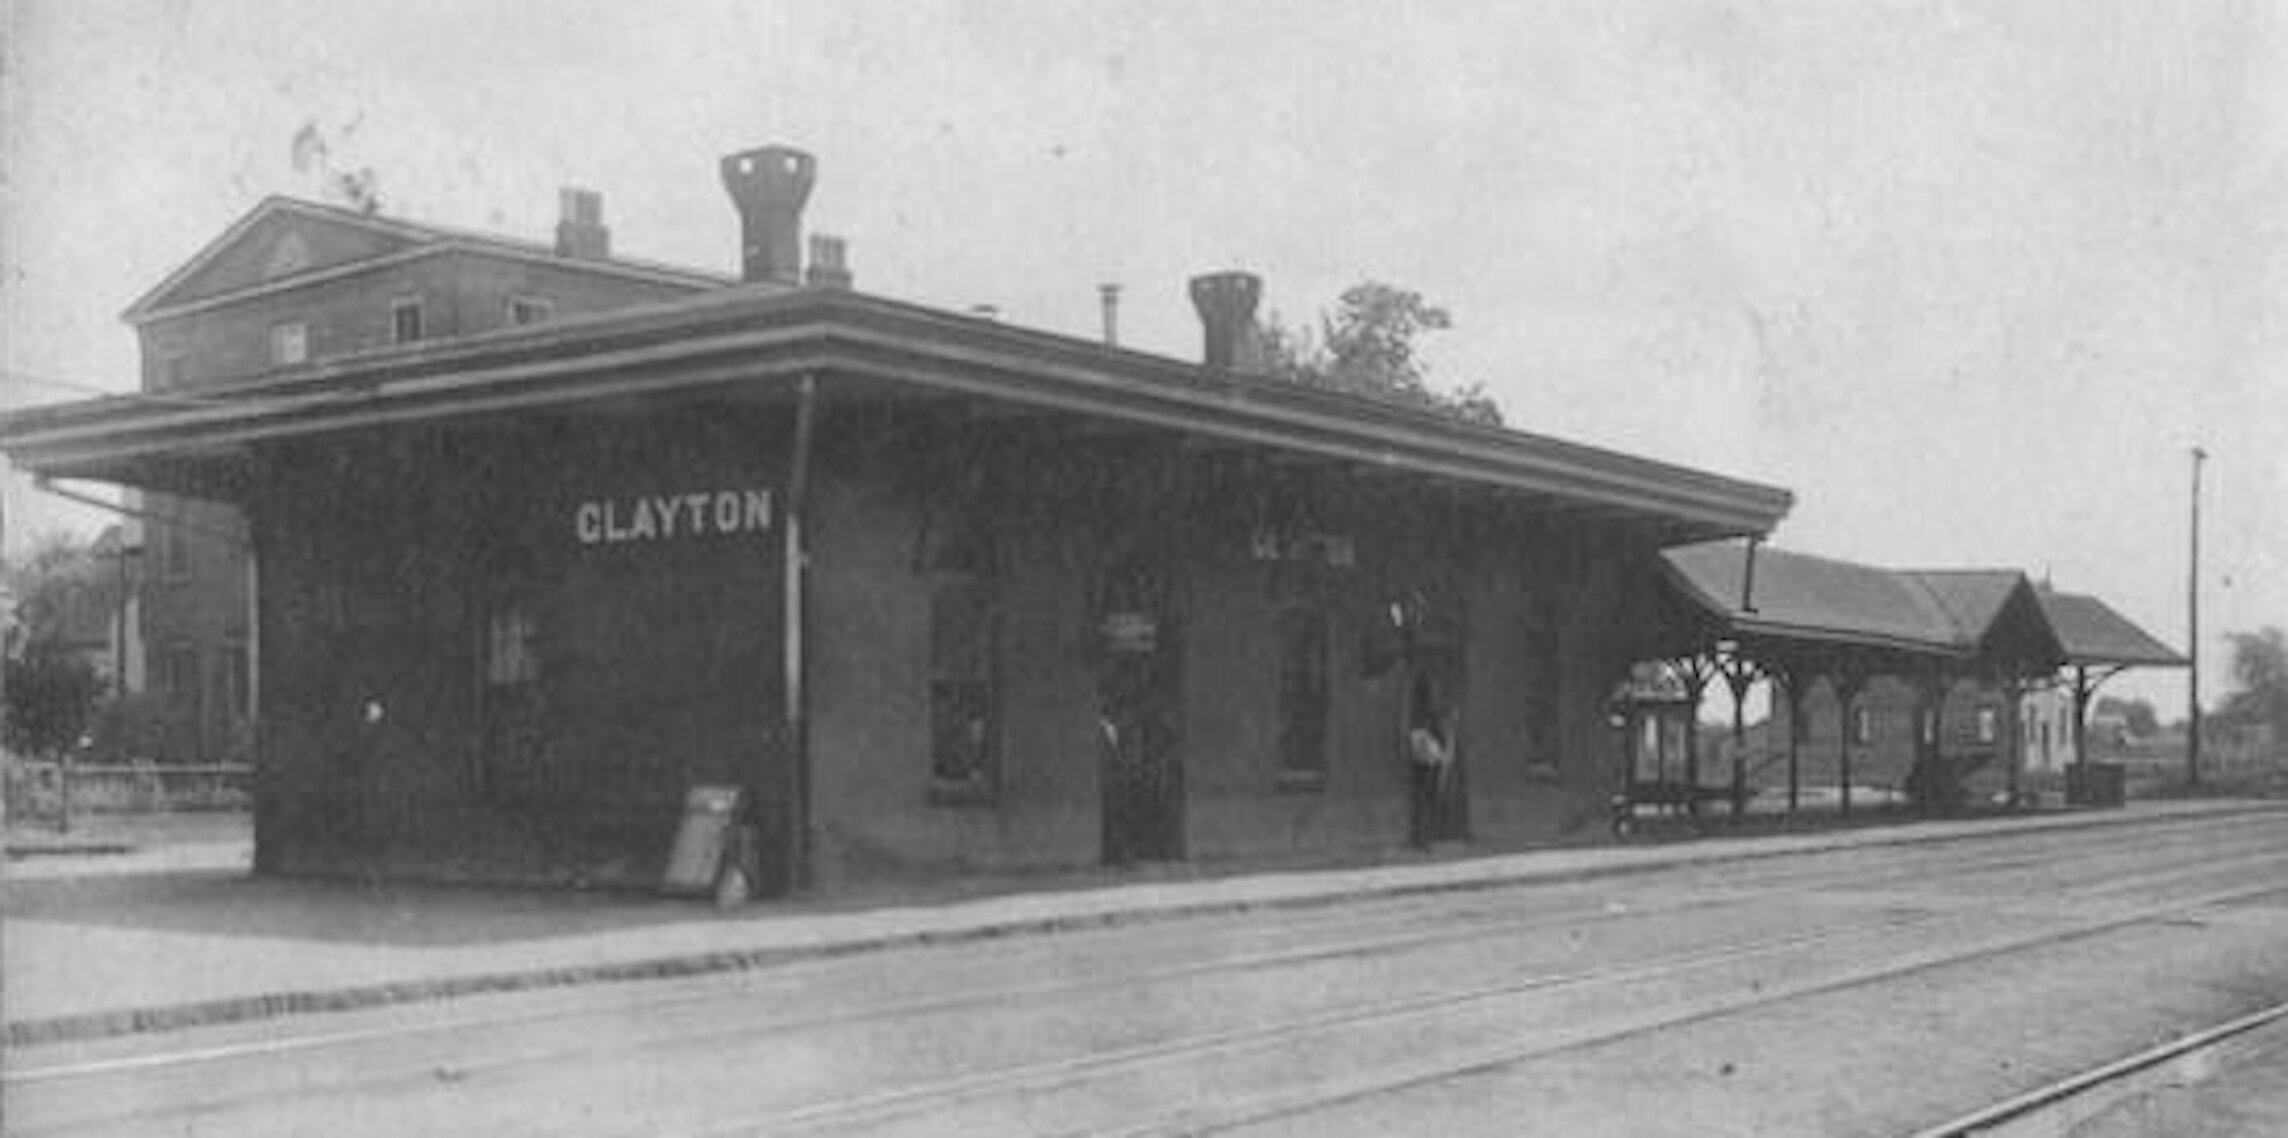 ClaytonTrain Station.jpg